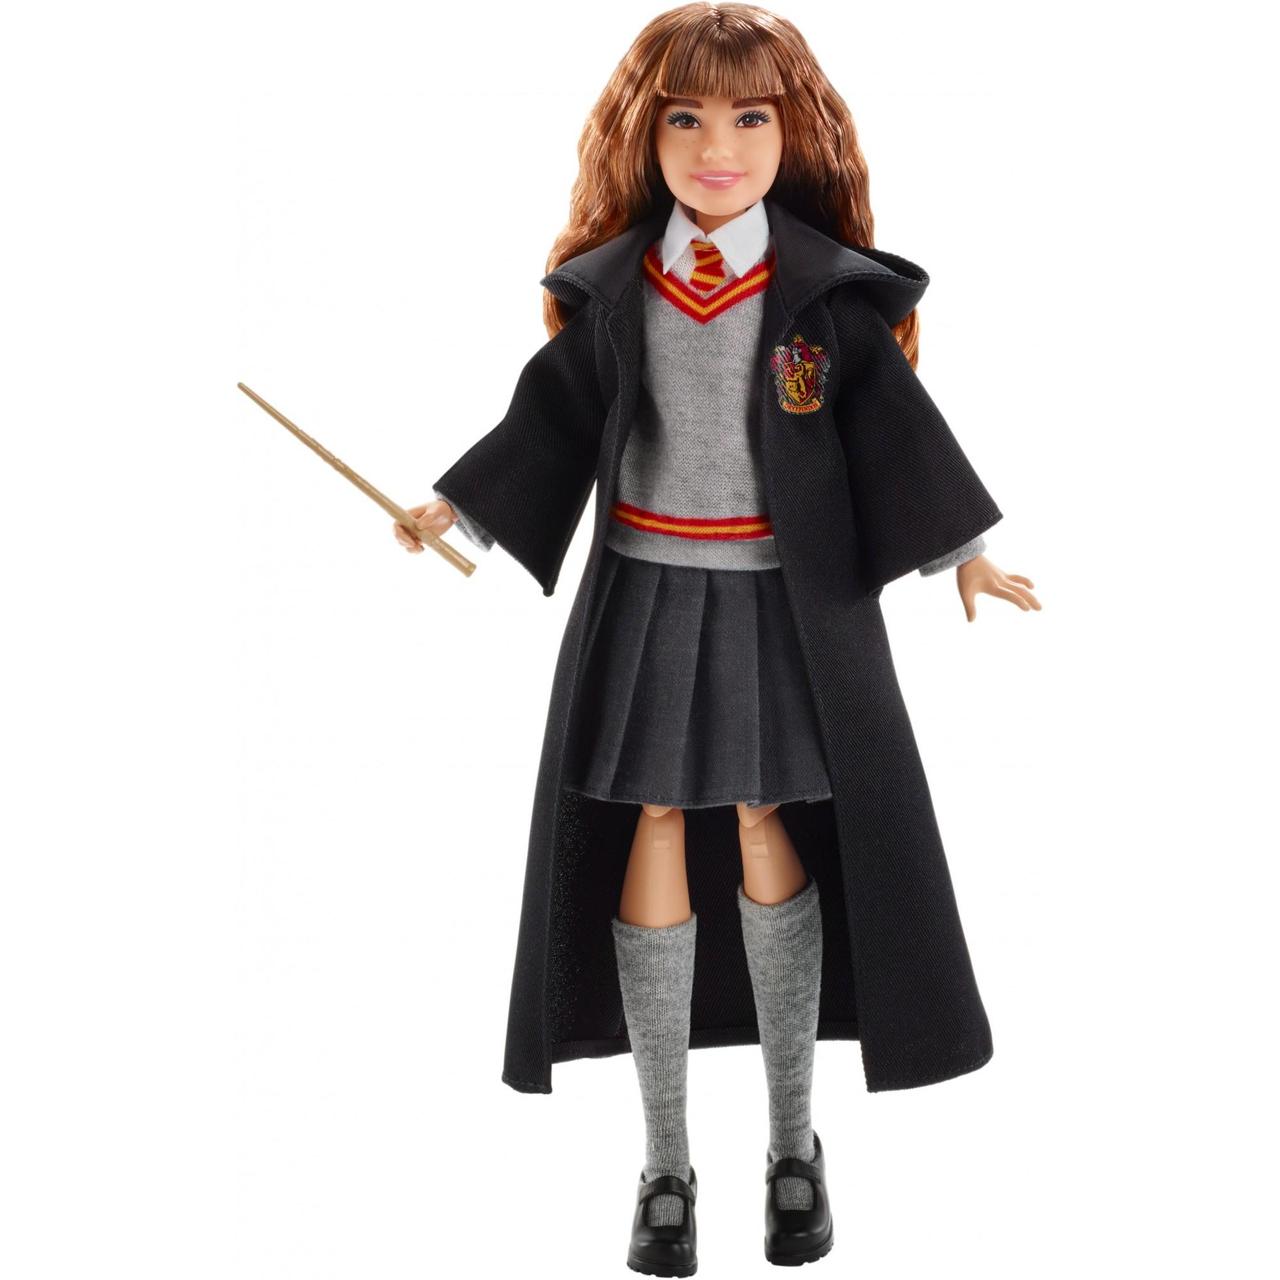 Лялька Герміона Грейнджер Гаррі Поттер Harry Potter Hermoine Granger Doll Hermione оригінал Mattel